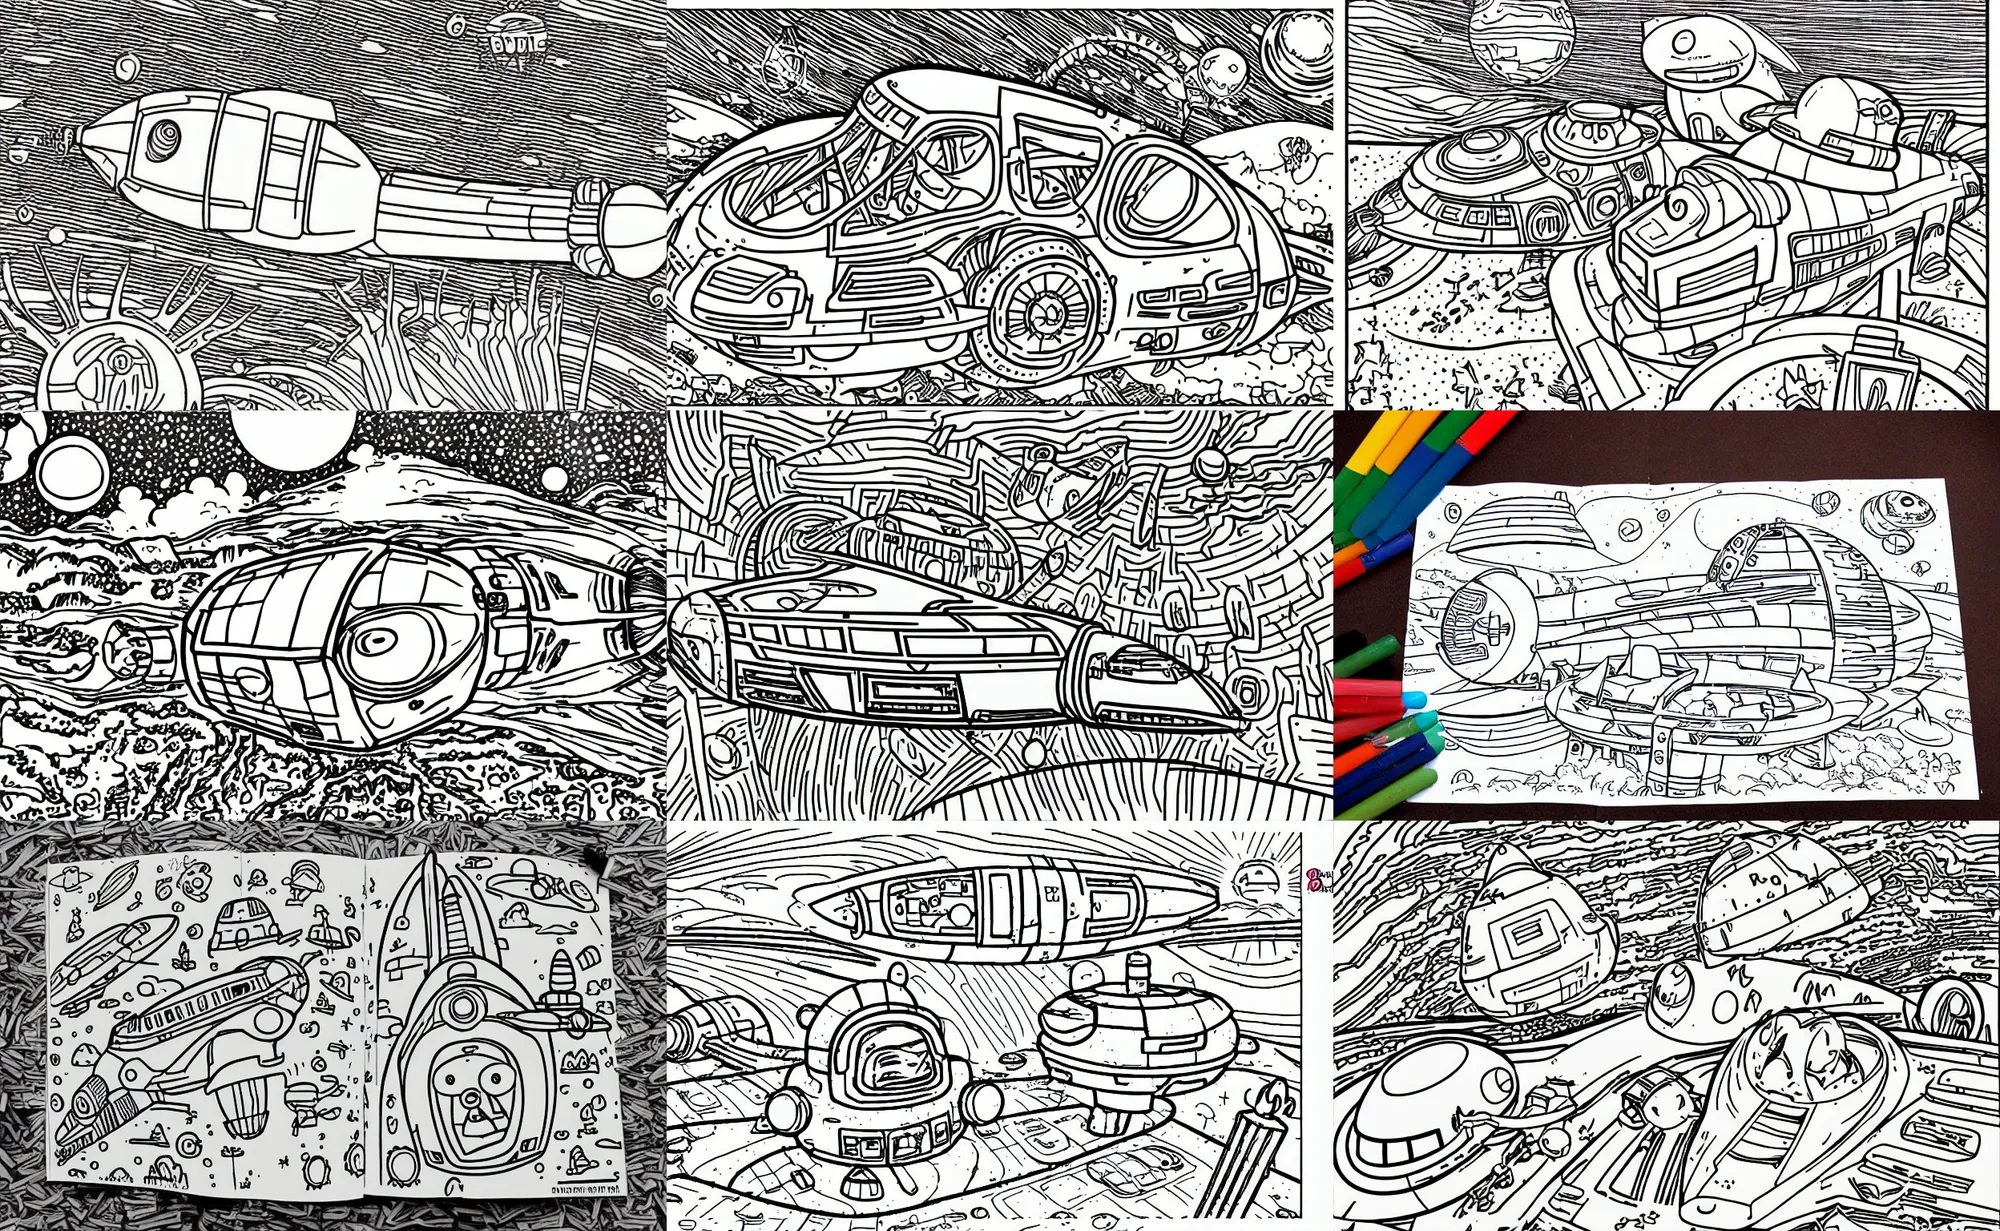 Prompt: simple coloring book for kids, retro spaceship crash landed on an alien landscape